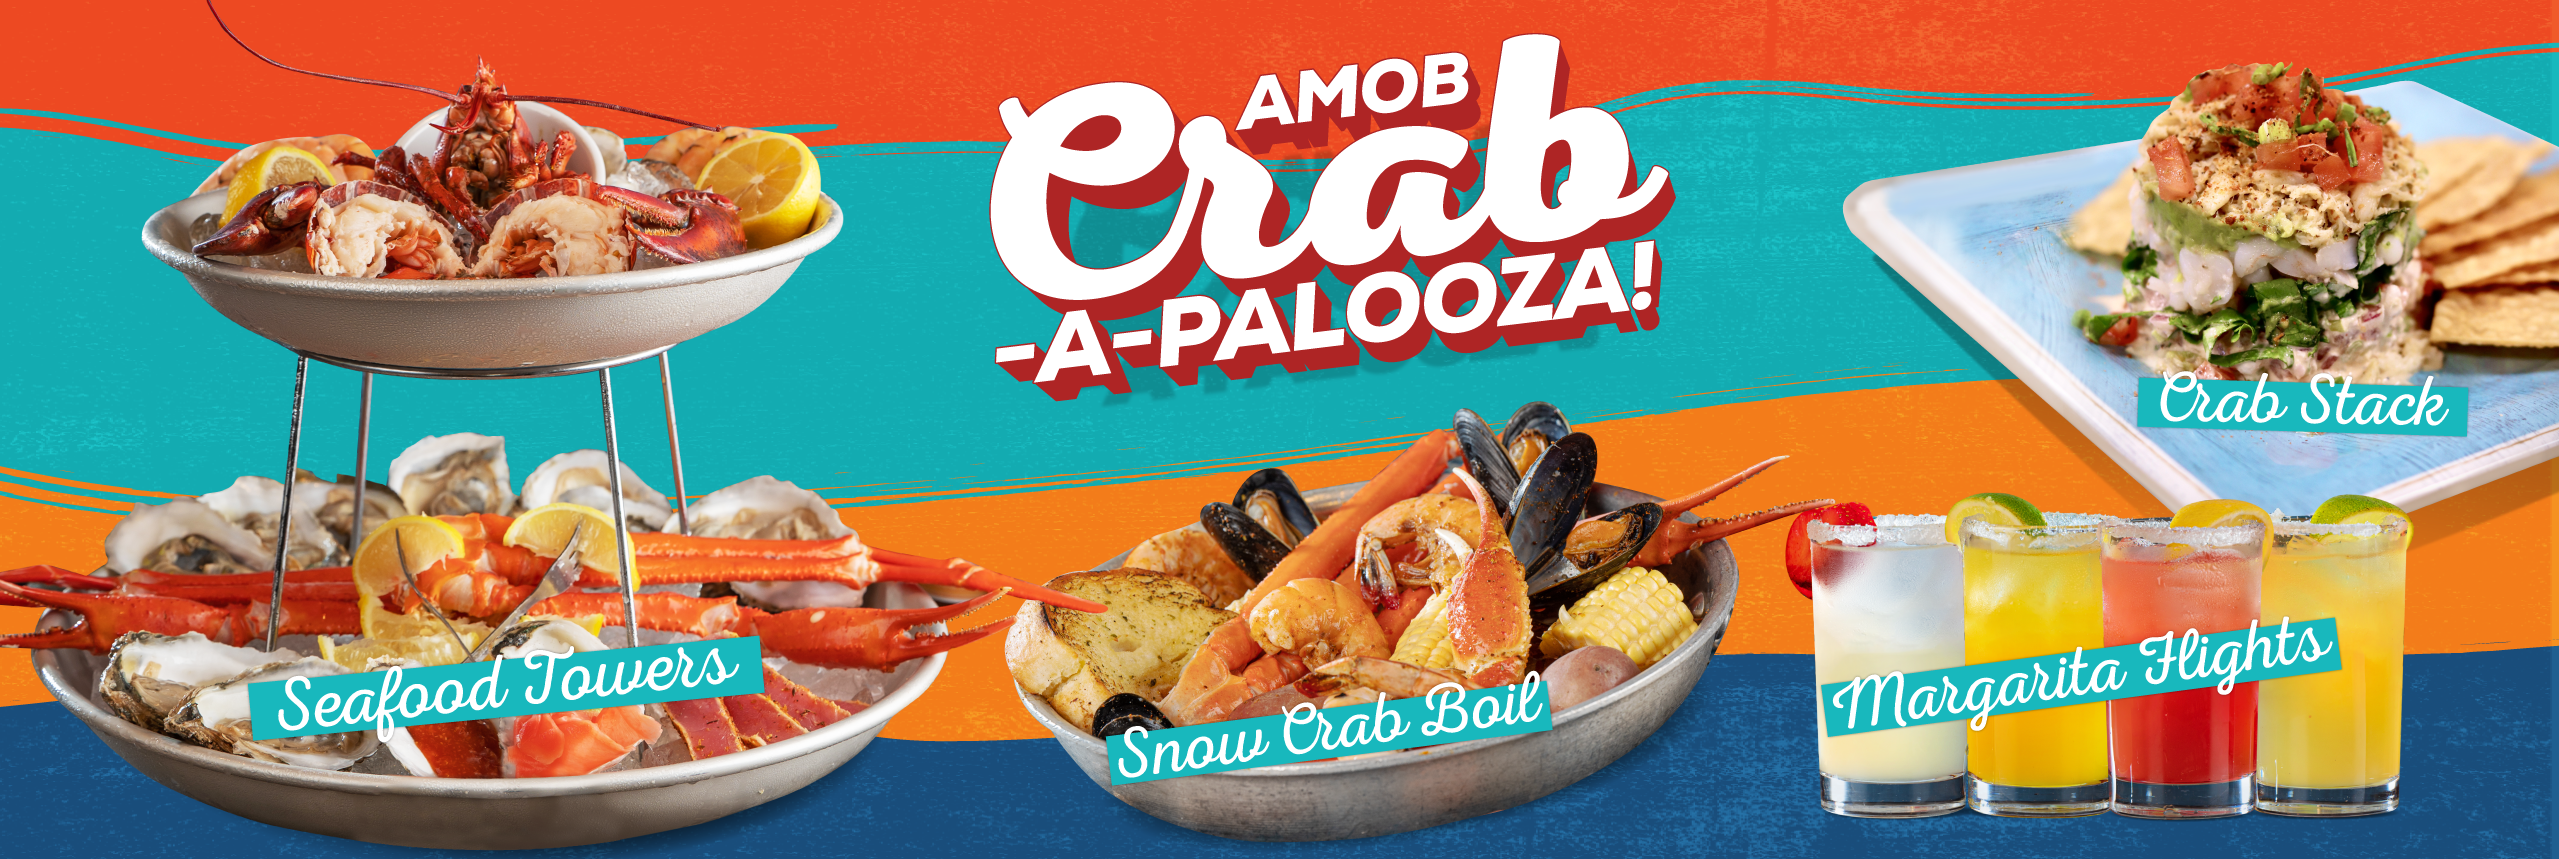 AMOB_Crab-a-palooza Graphics_Web Header